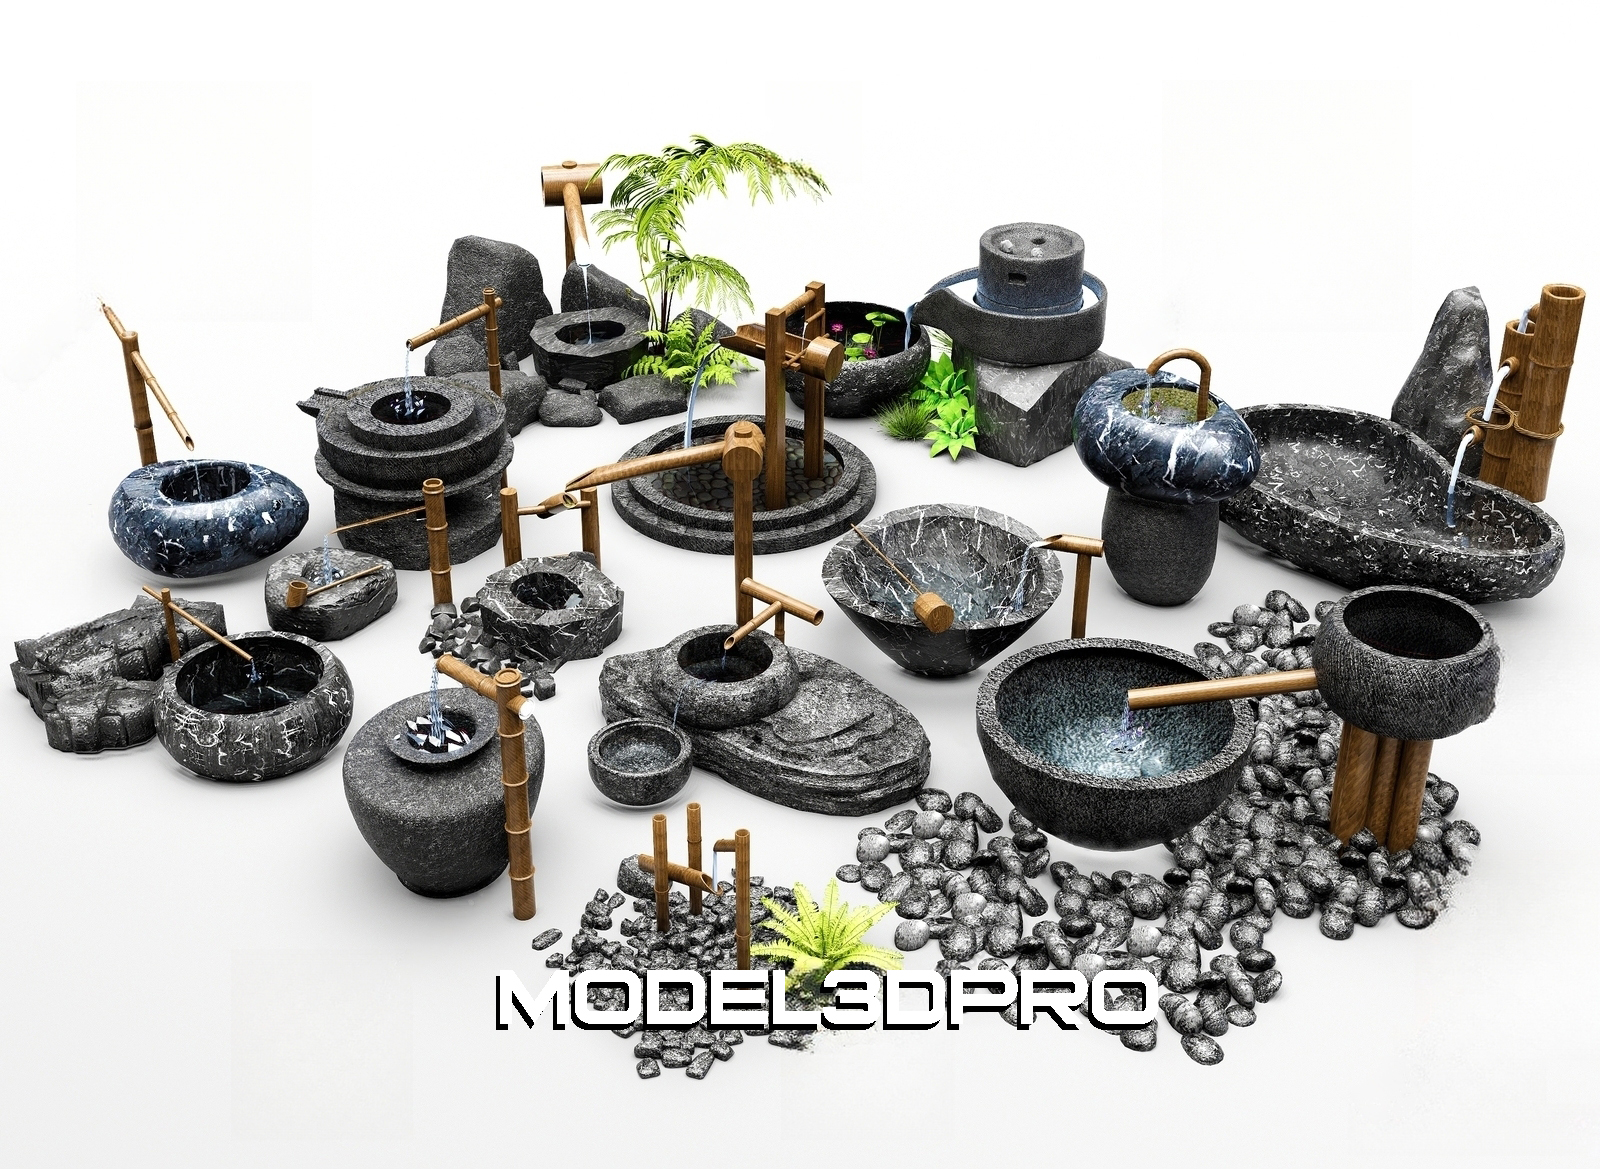 3D Stone Sink Pedestal model Stone Sink 3D model Free Sink 3D Models for Download Garden stone sink 3d model